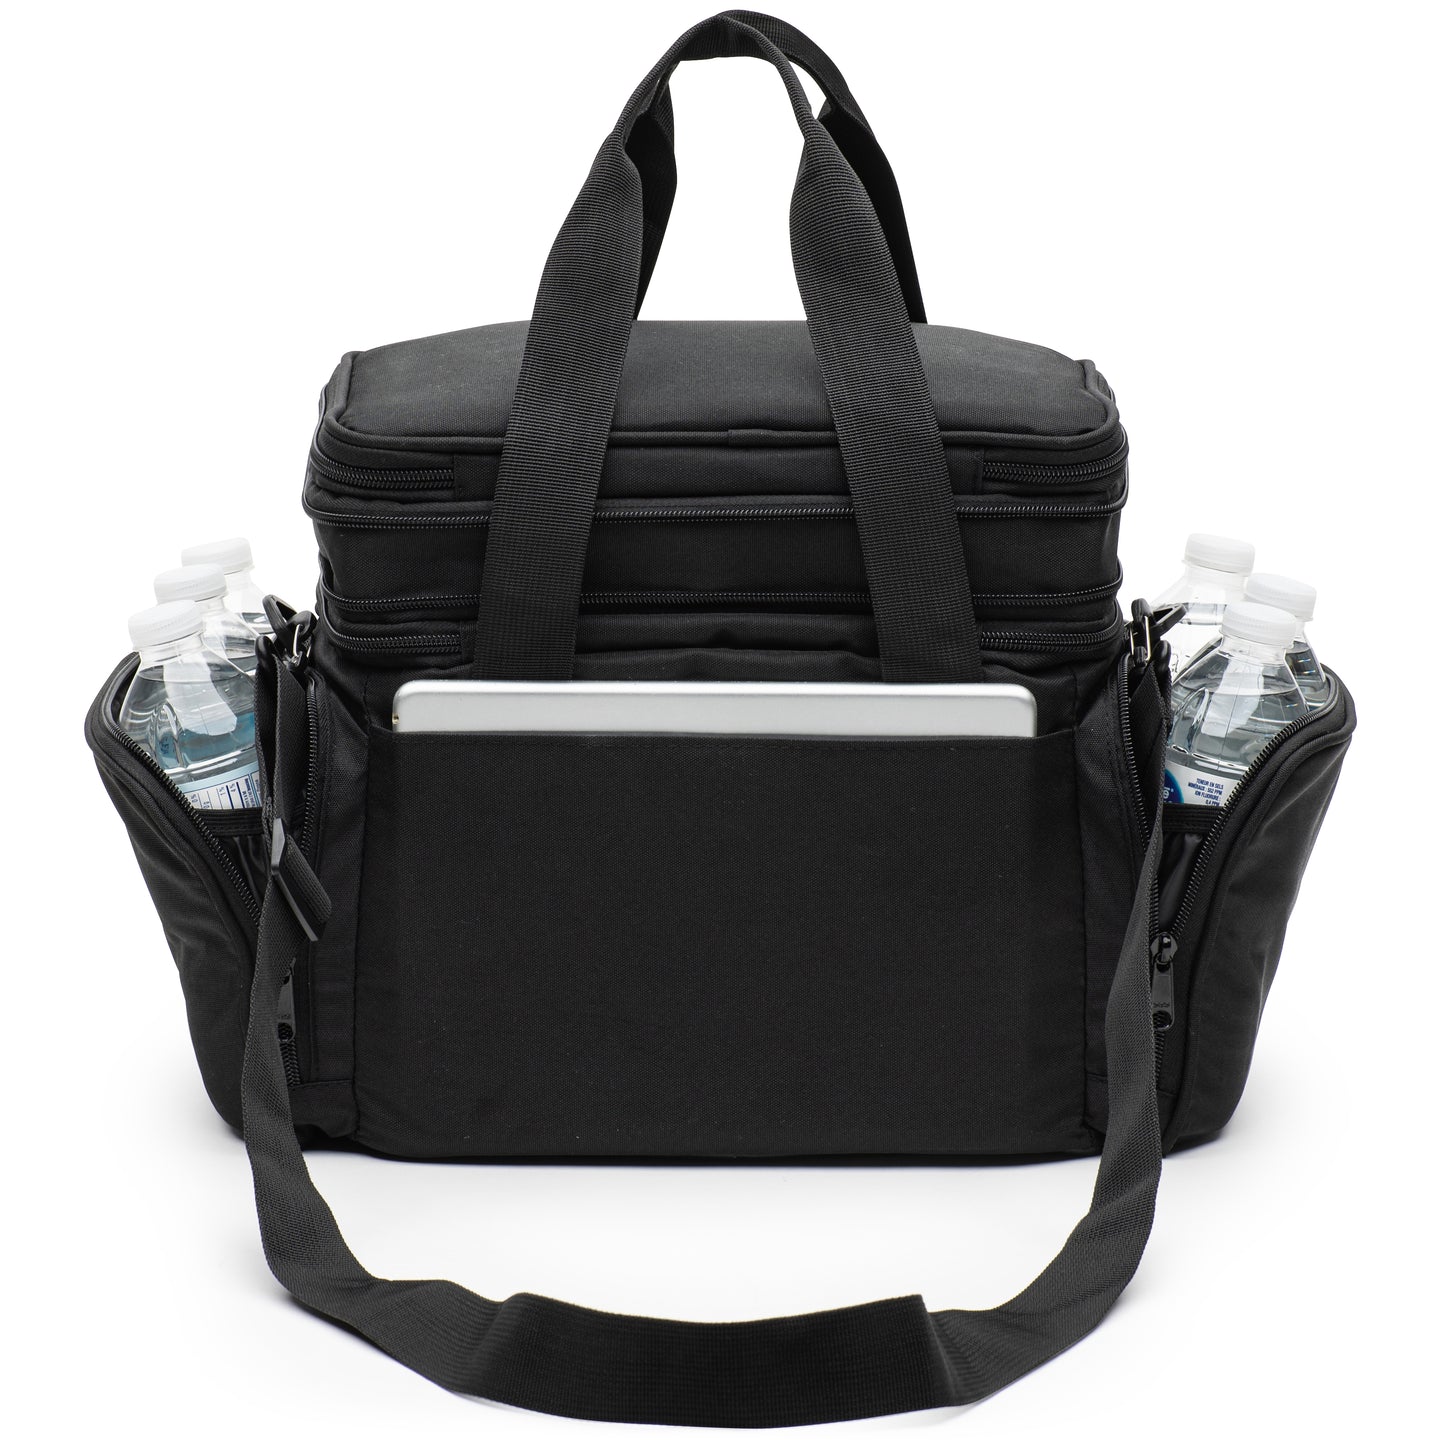 Expandable Cooler Lunch Bag. 600D Fabric, 8MM Insulation, Durable Zipper.